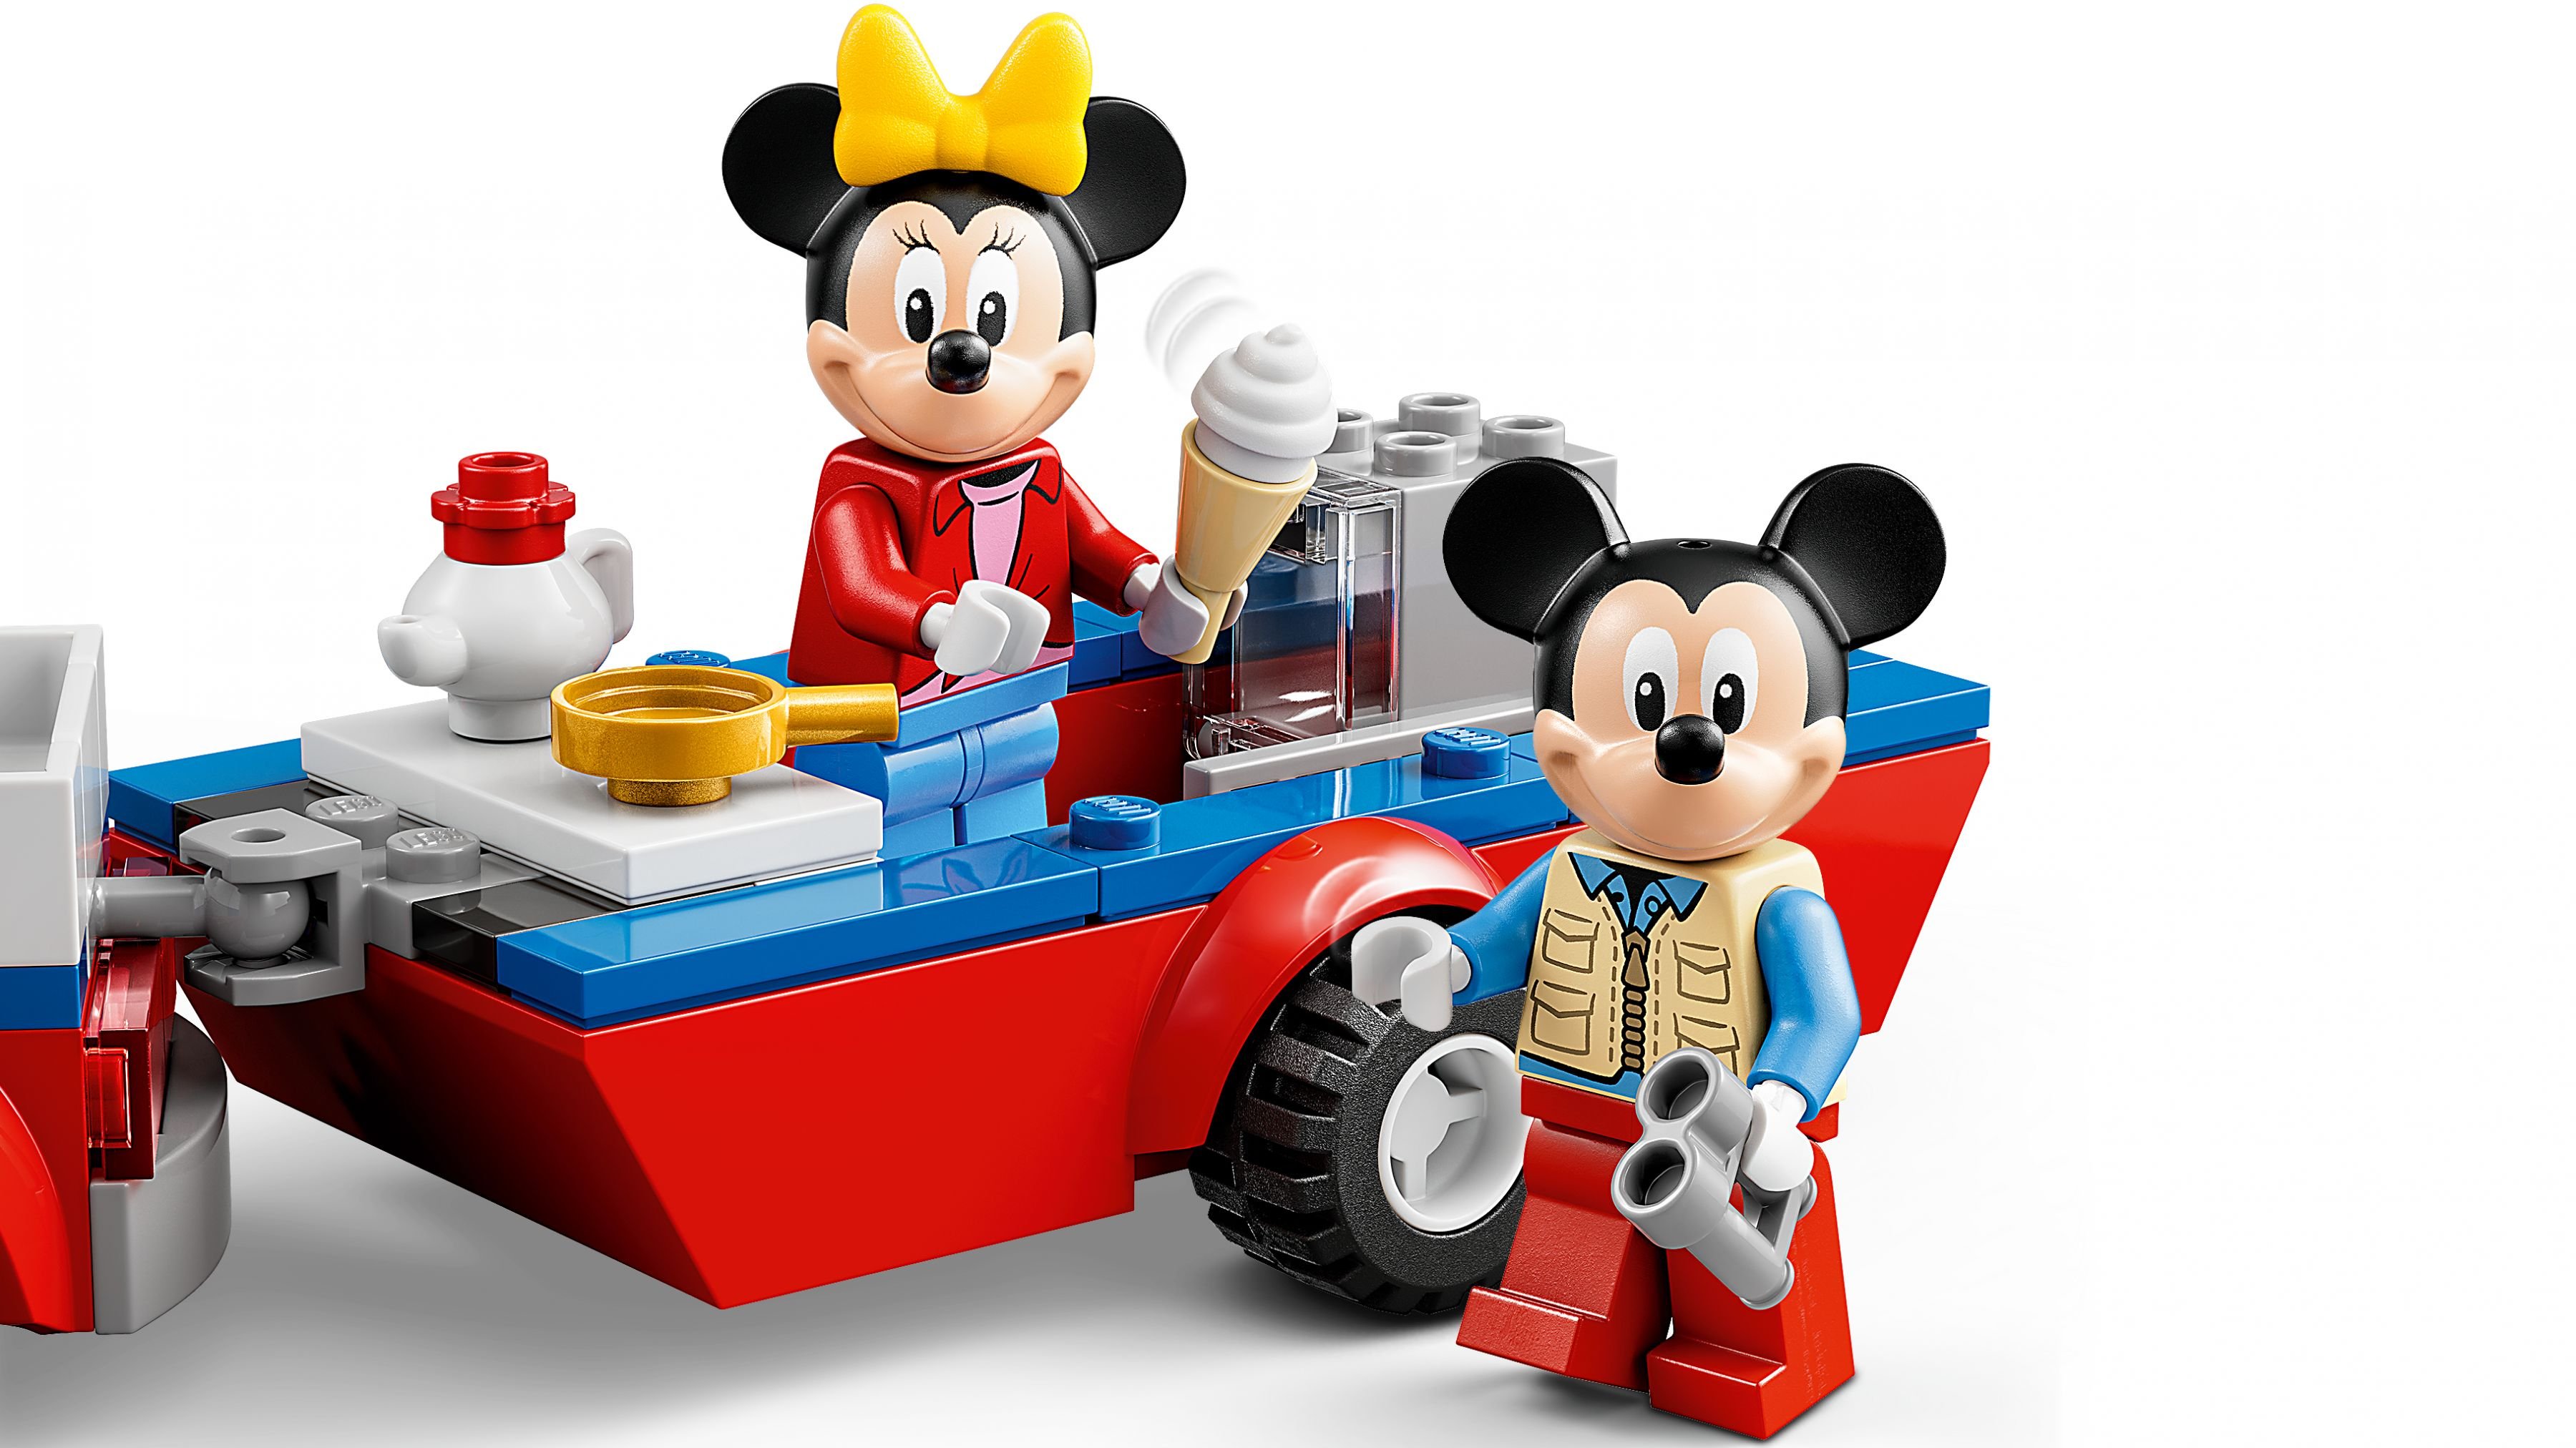 LEGO Disney 10777 Mickys und Minnies Campingausflug LEGO_10777_WEB_SEC03_NOBG.jpg